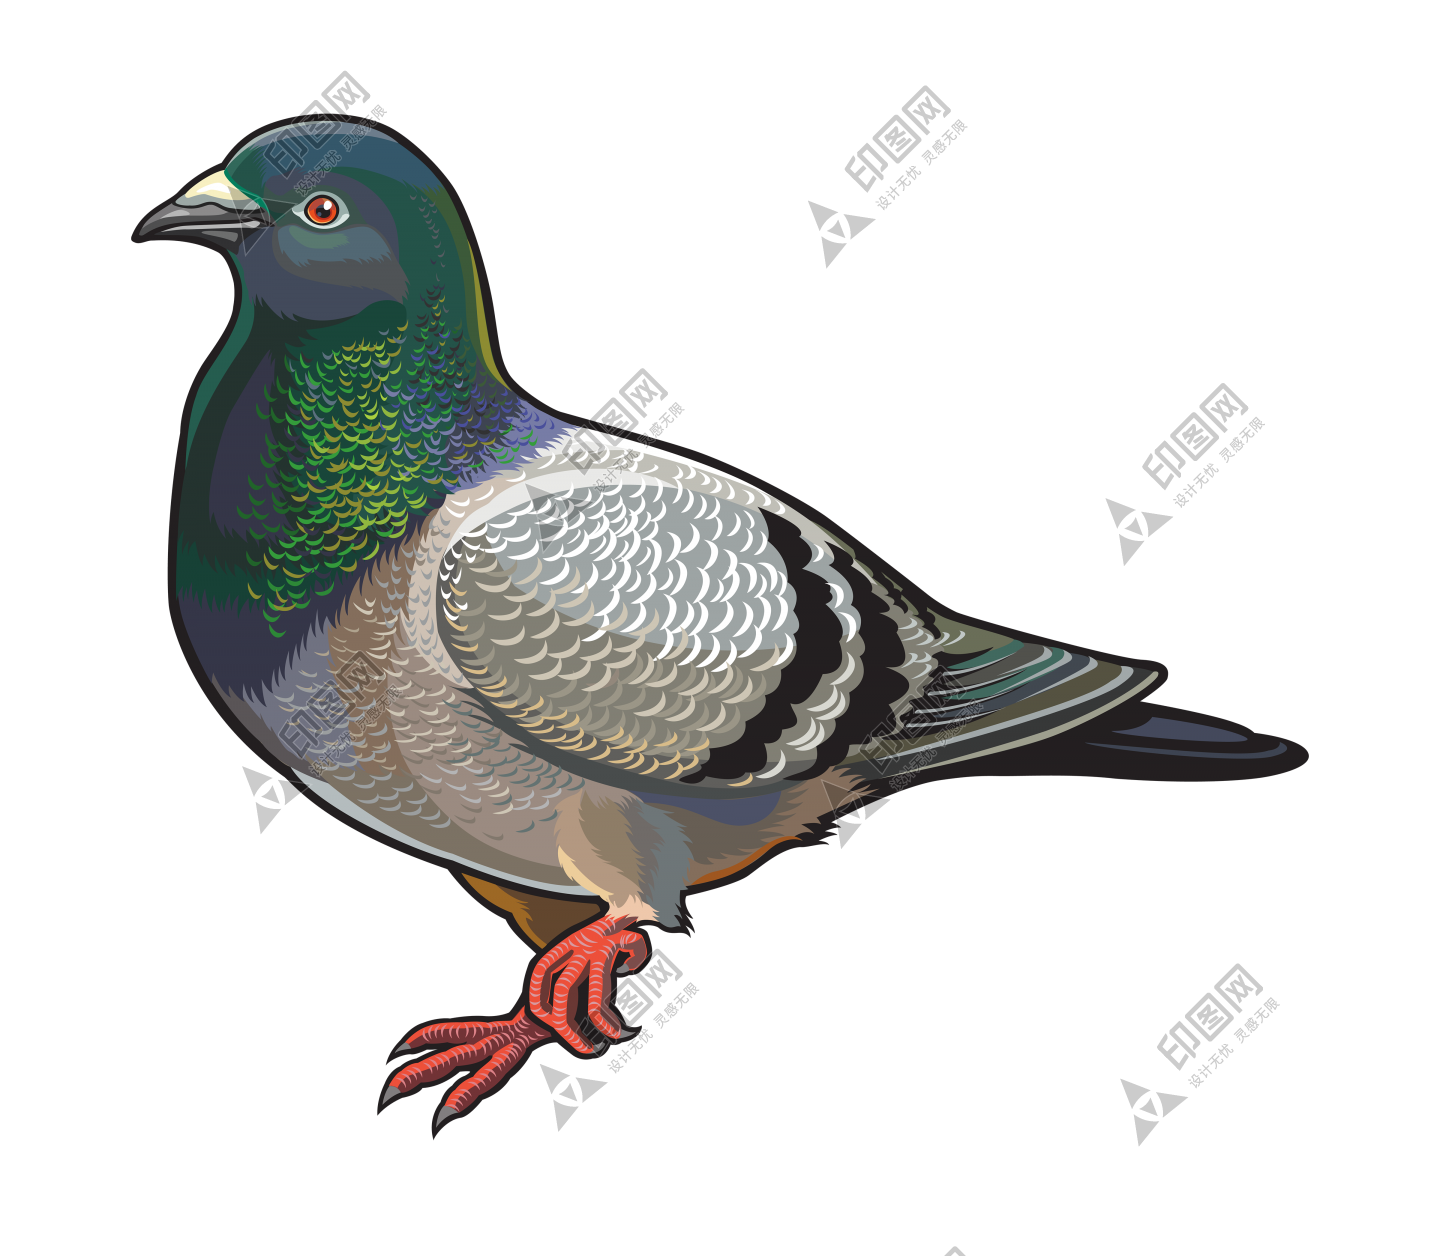 鸟_鸽子_鹁鸽_pigeon_pigeon